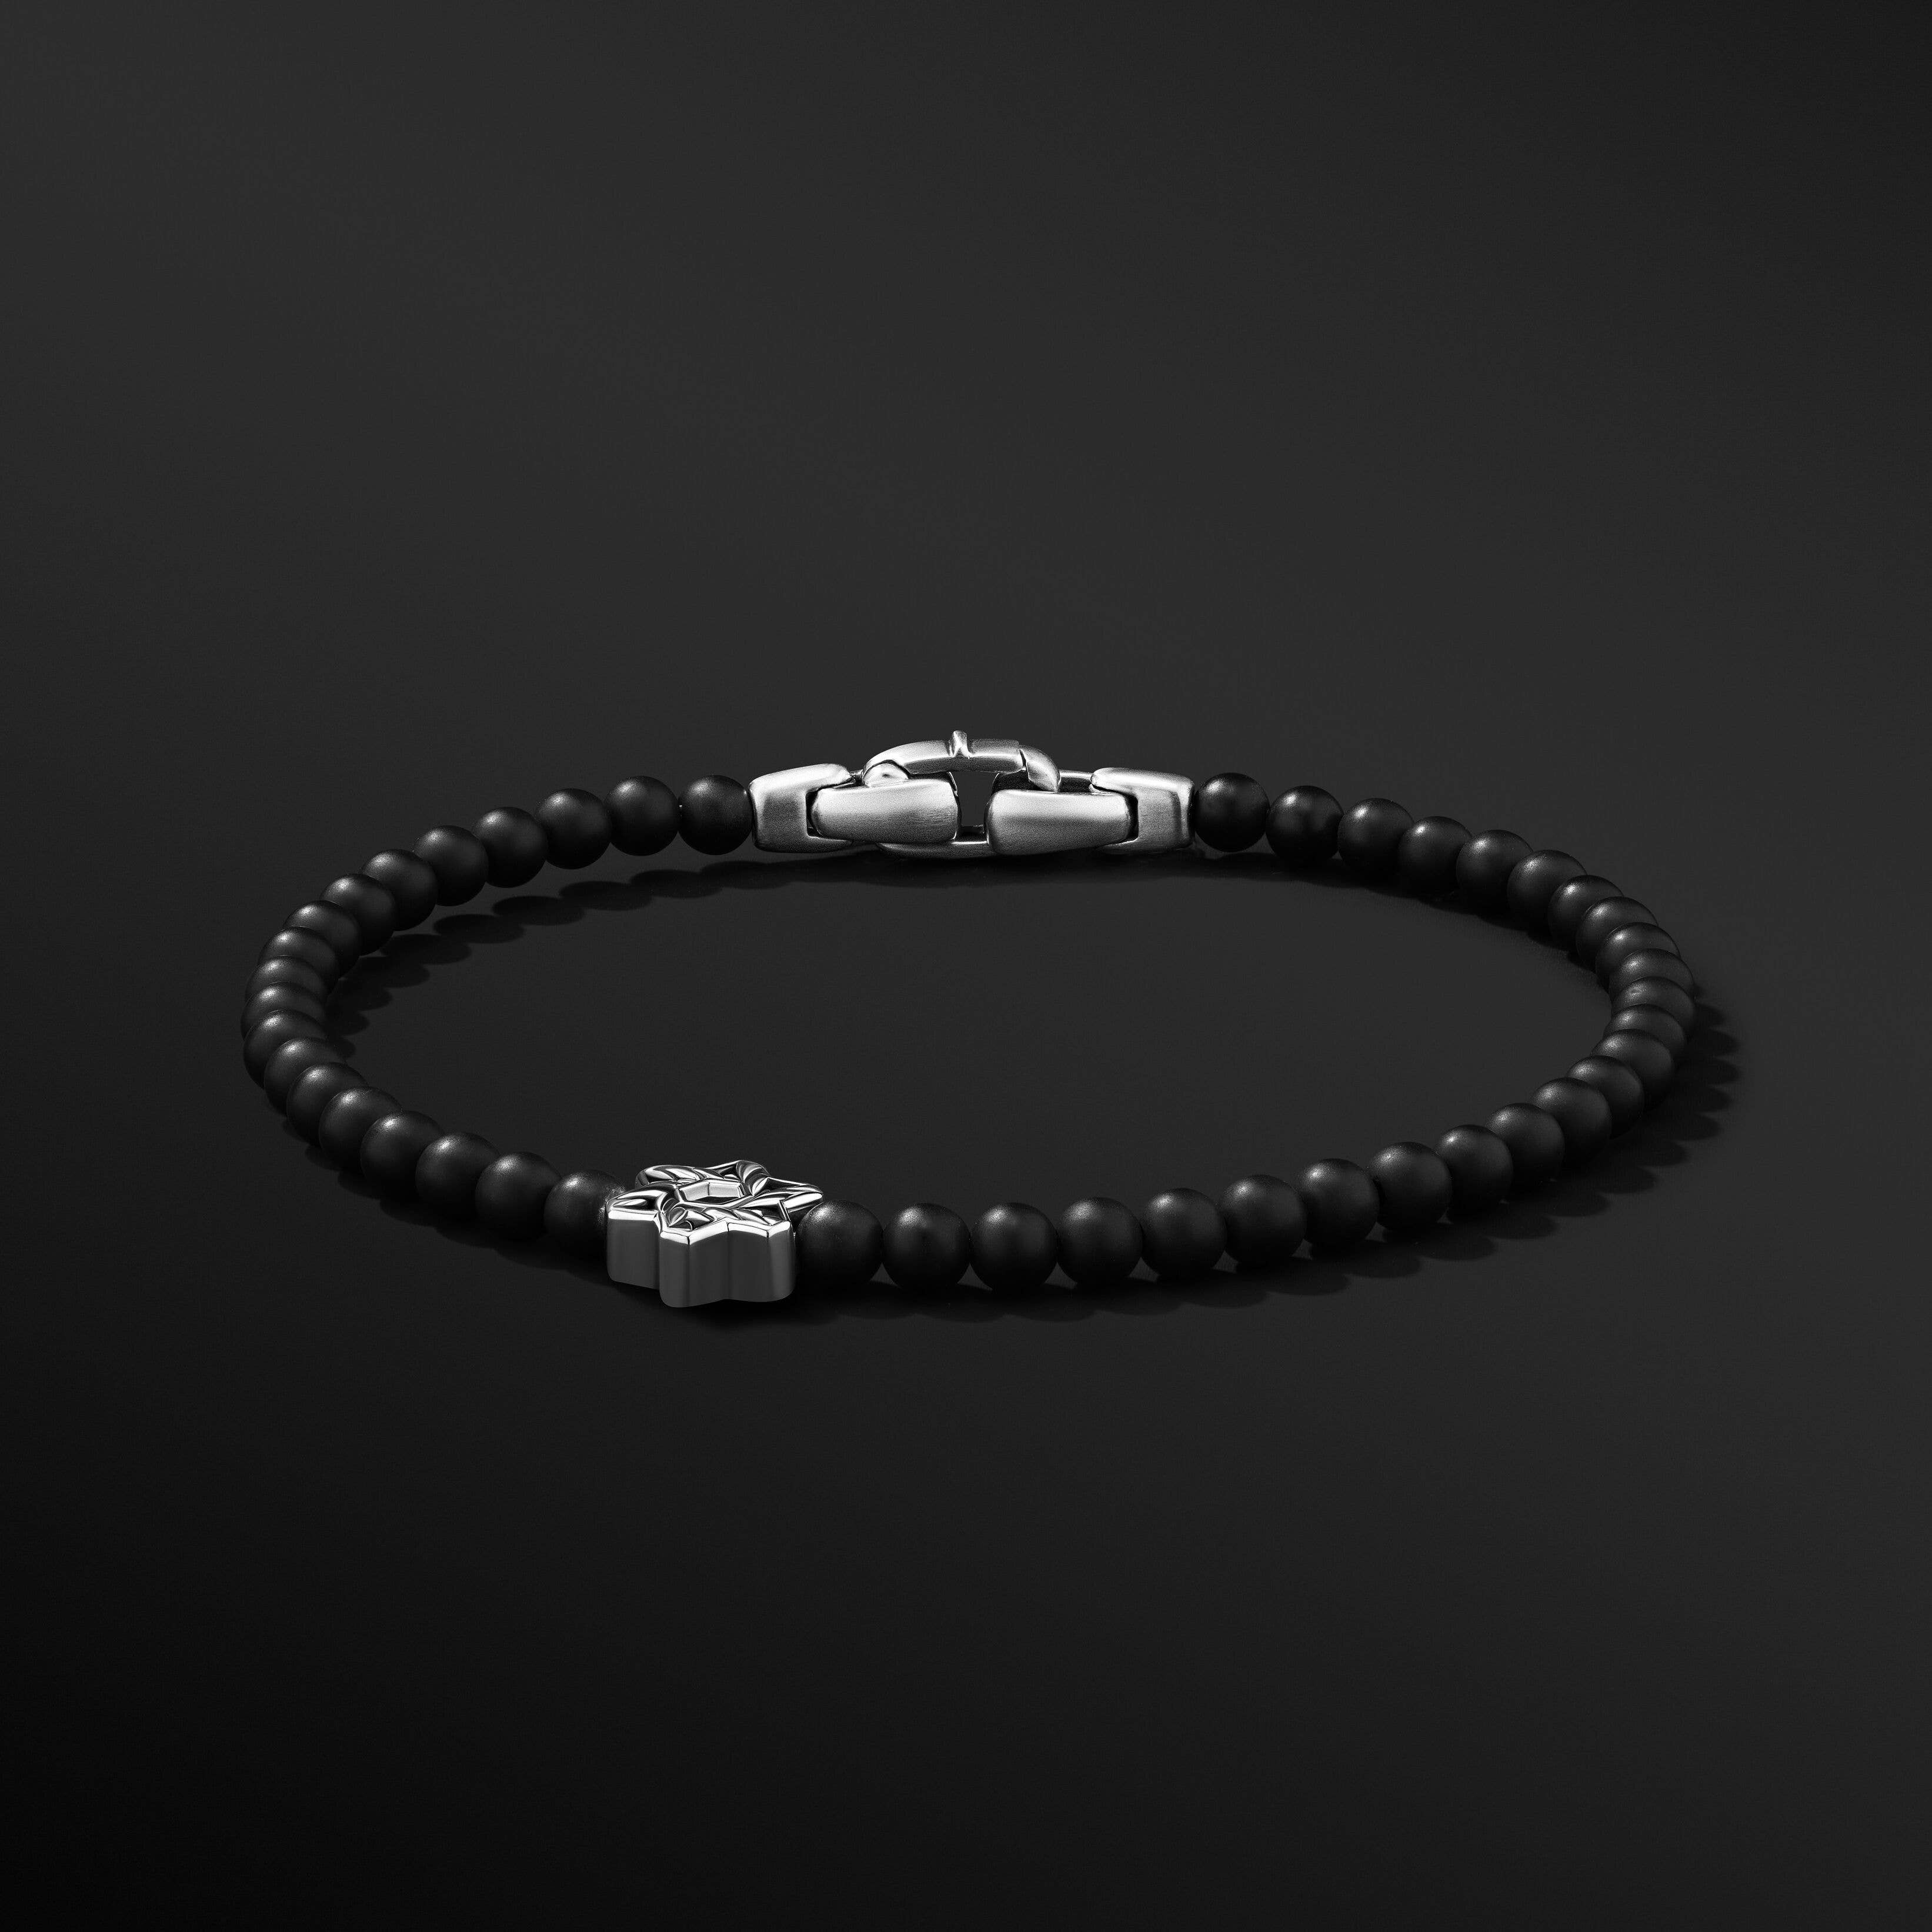 Spiritual Beads Star of David Bracelet with Black Onyx